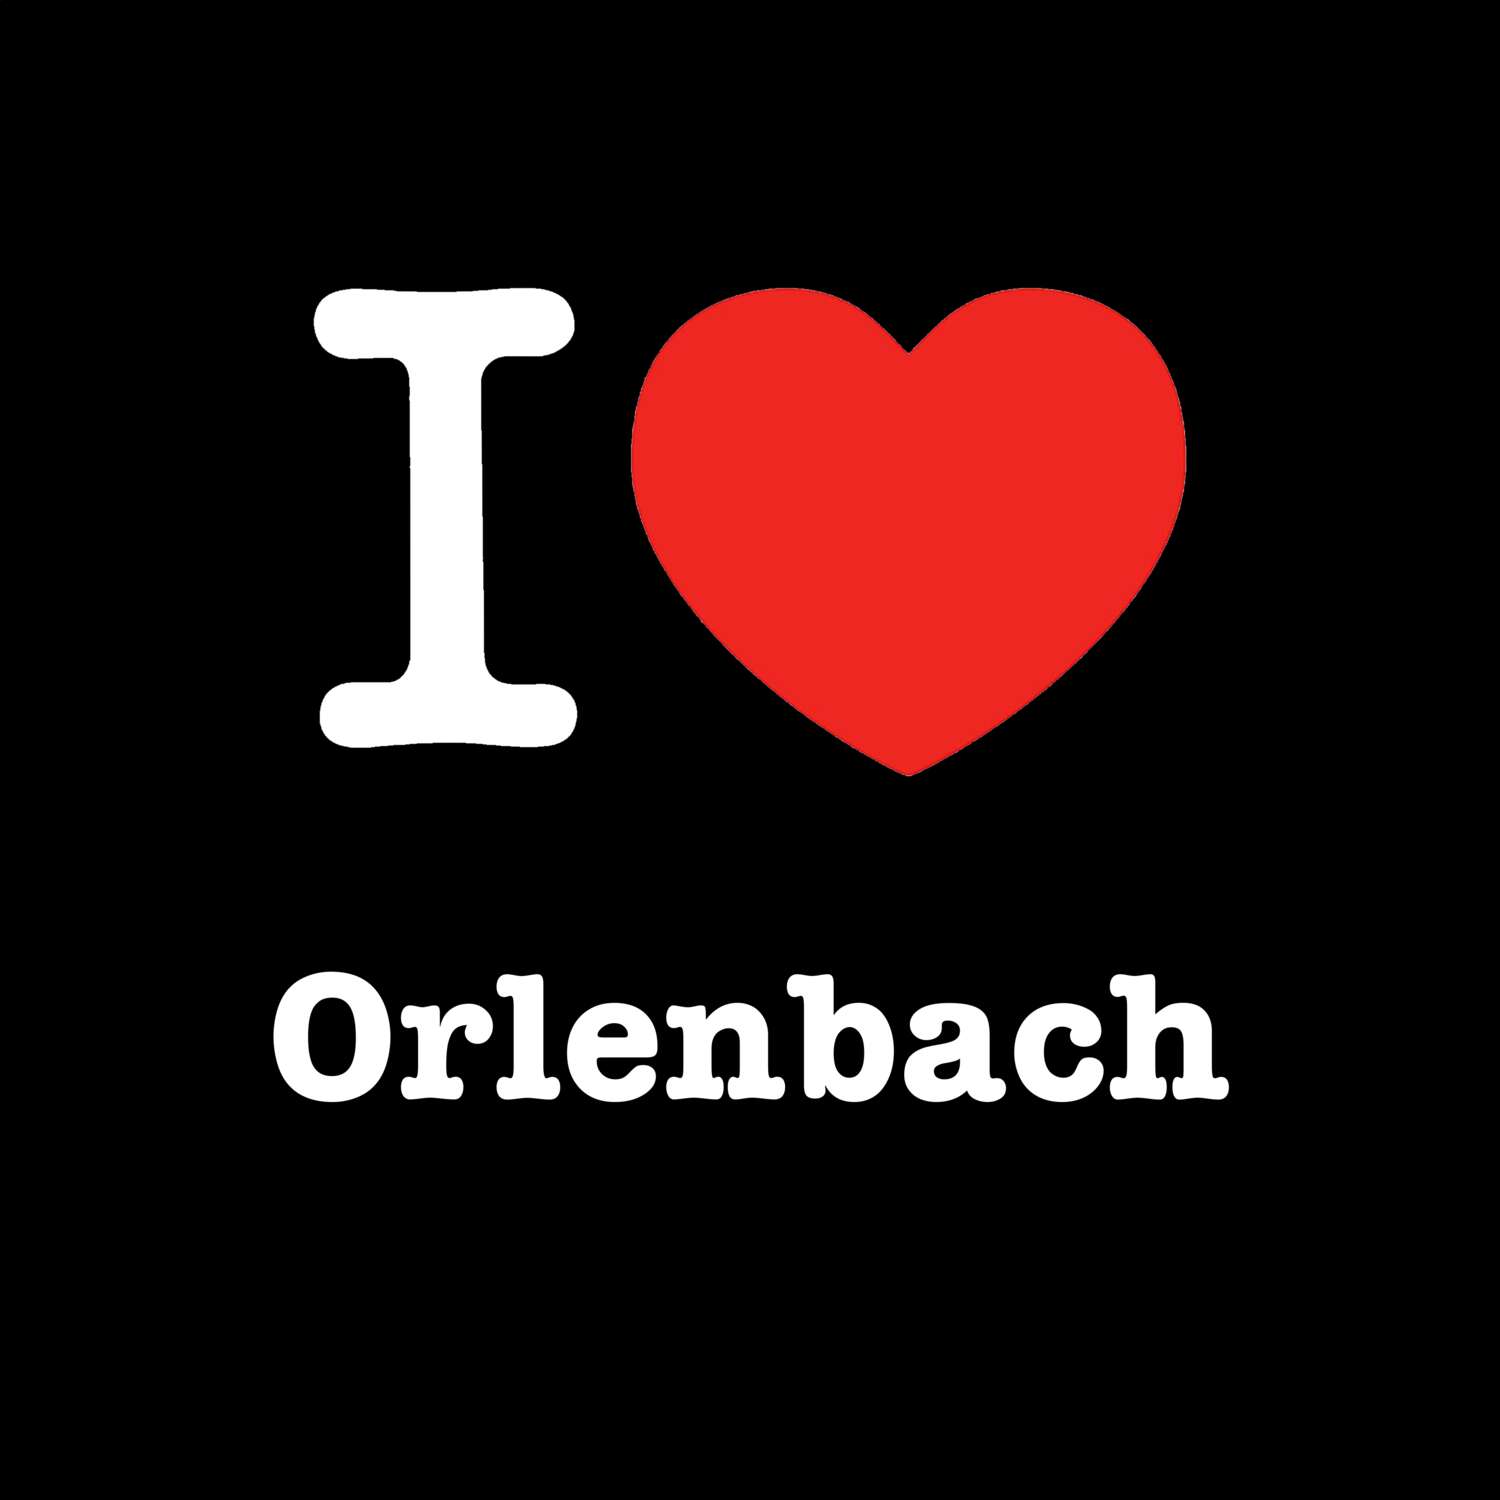 Orlenbach T-Shirt »I love«